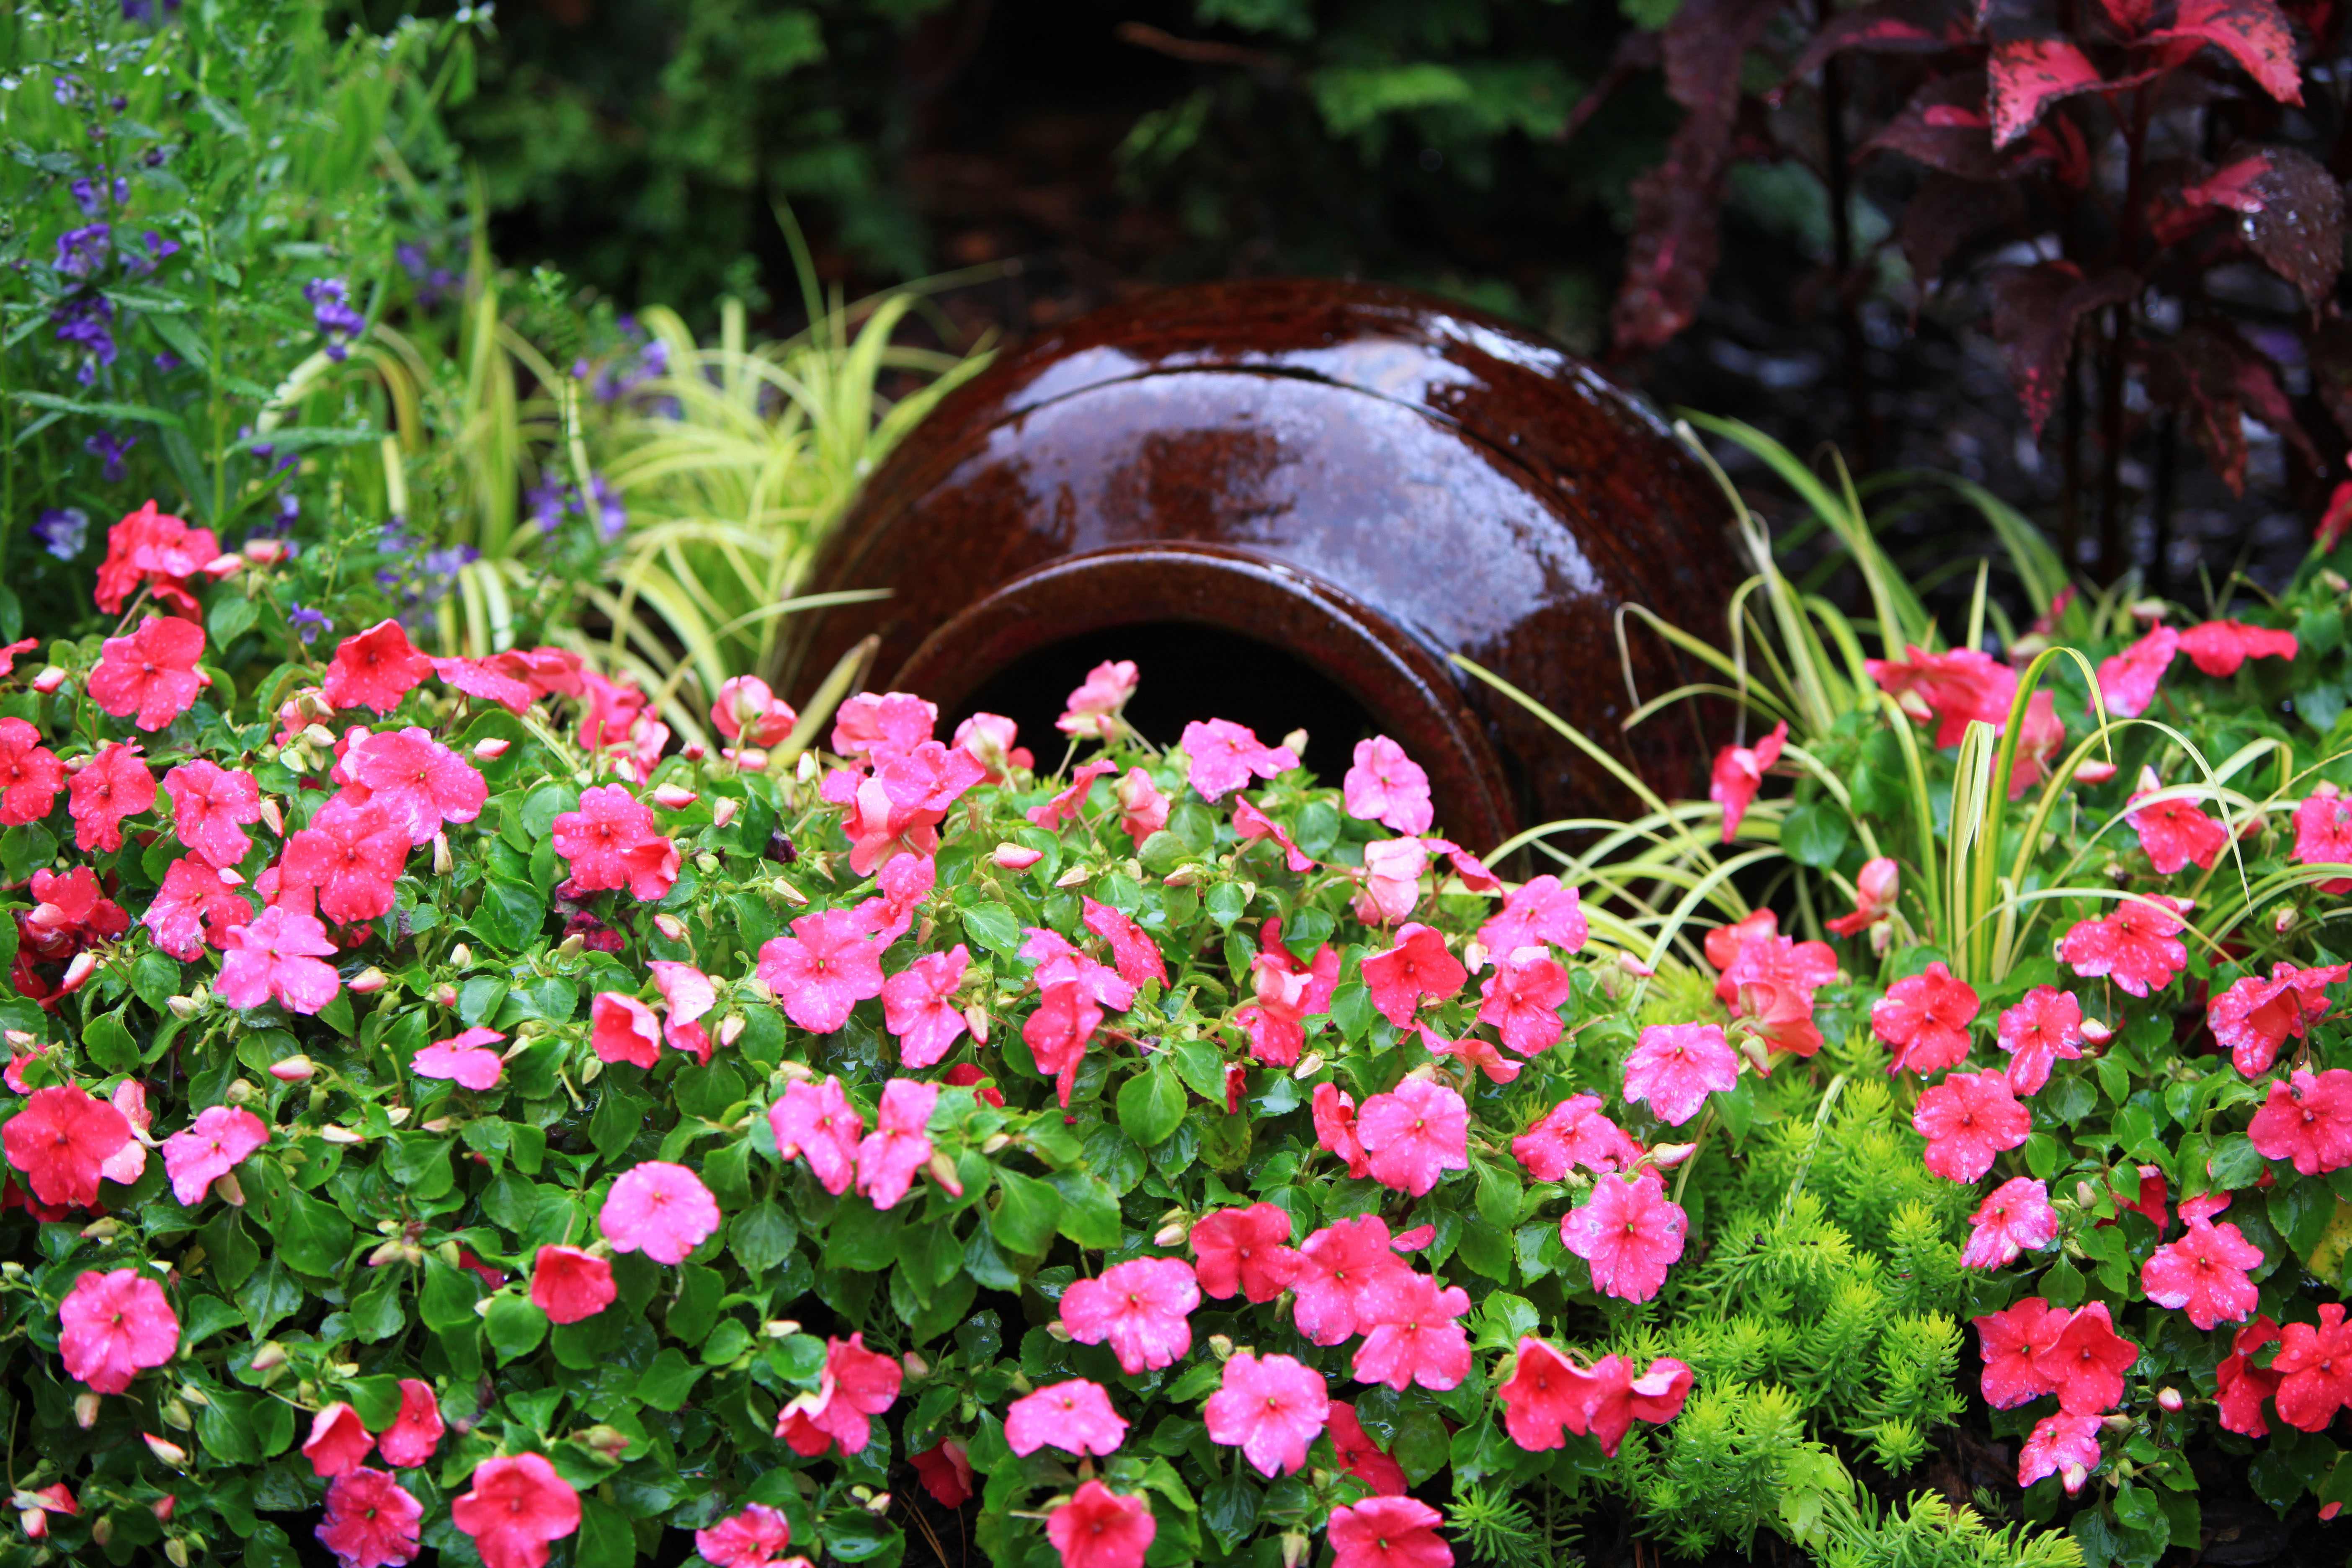 DIY Spilling Flower Pot Will Spill Joy Into Your Garden